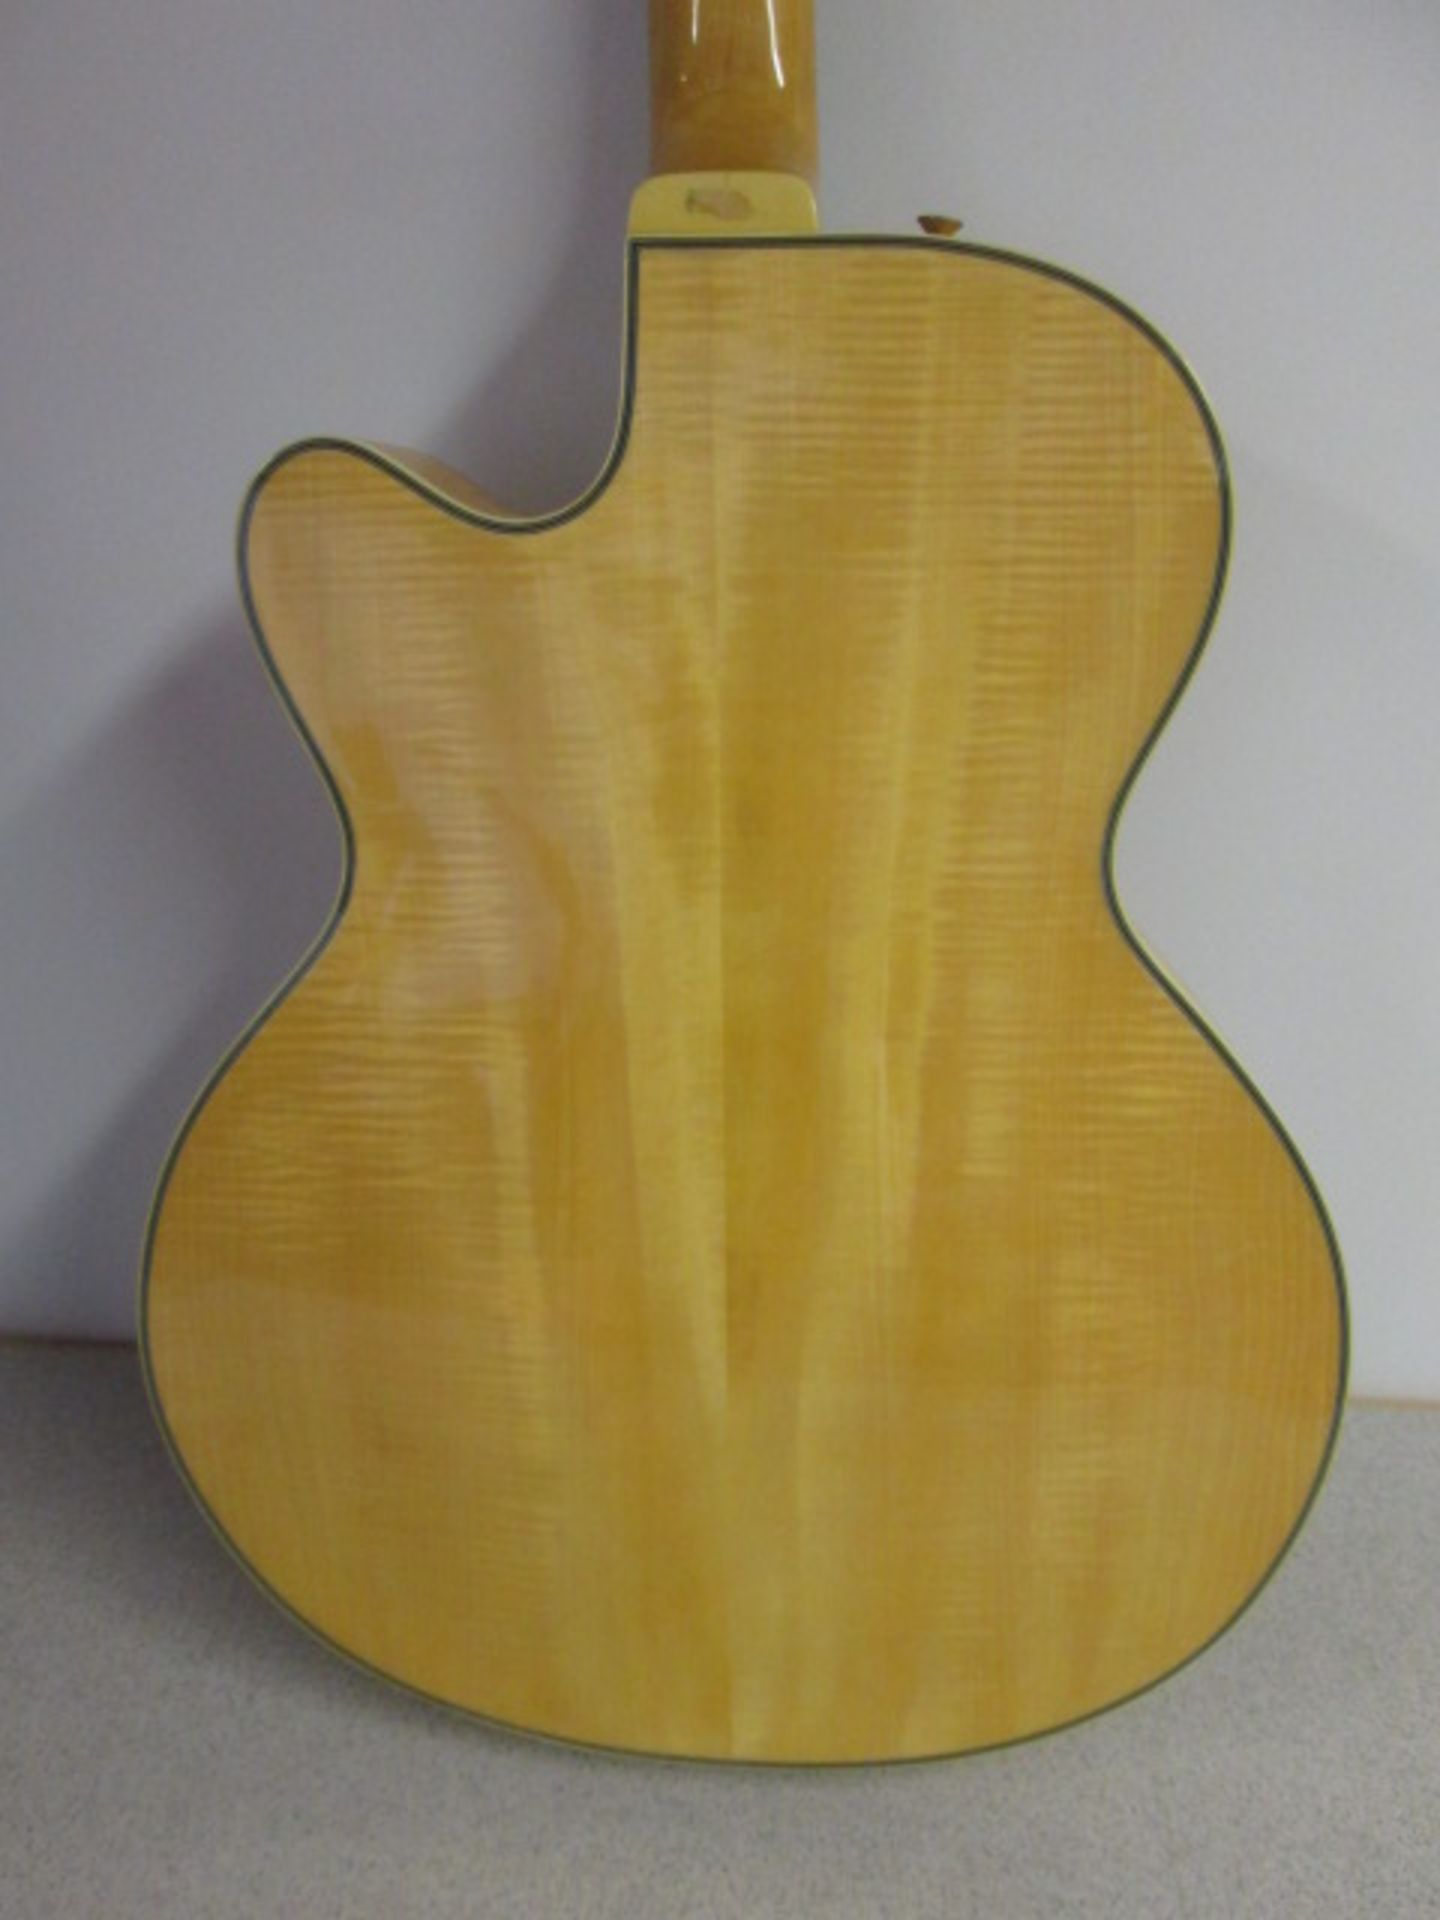 Epiphone Joe Pass Acoustic Guitar - Image 2 of 10